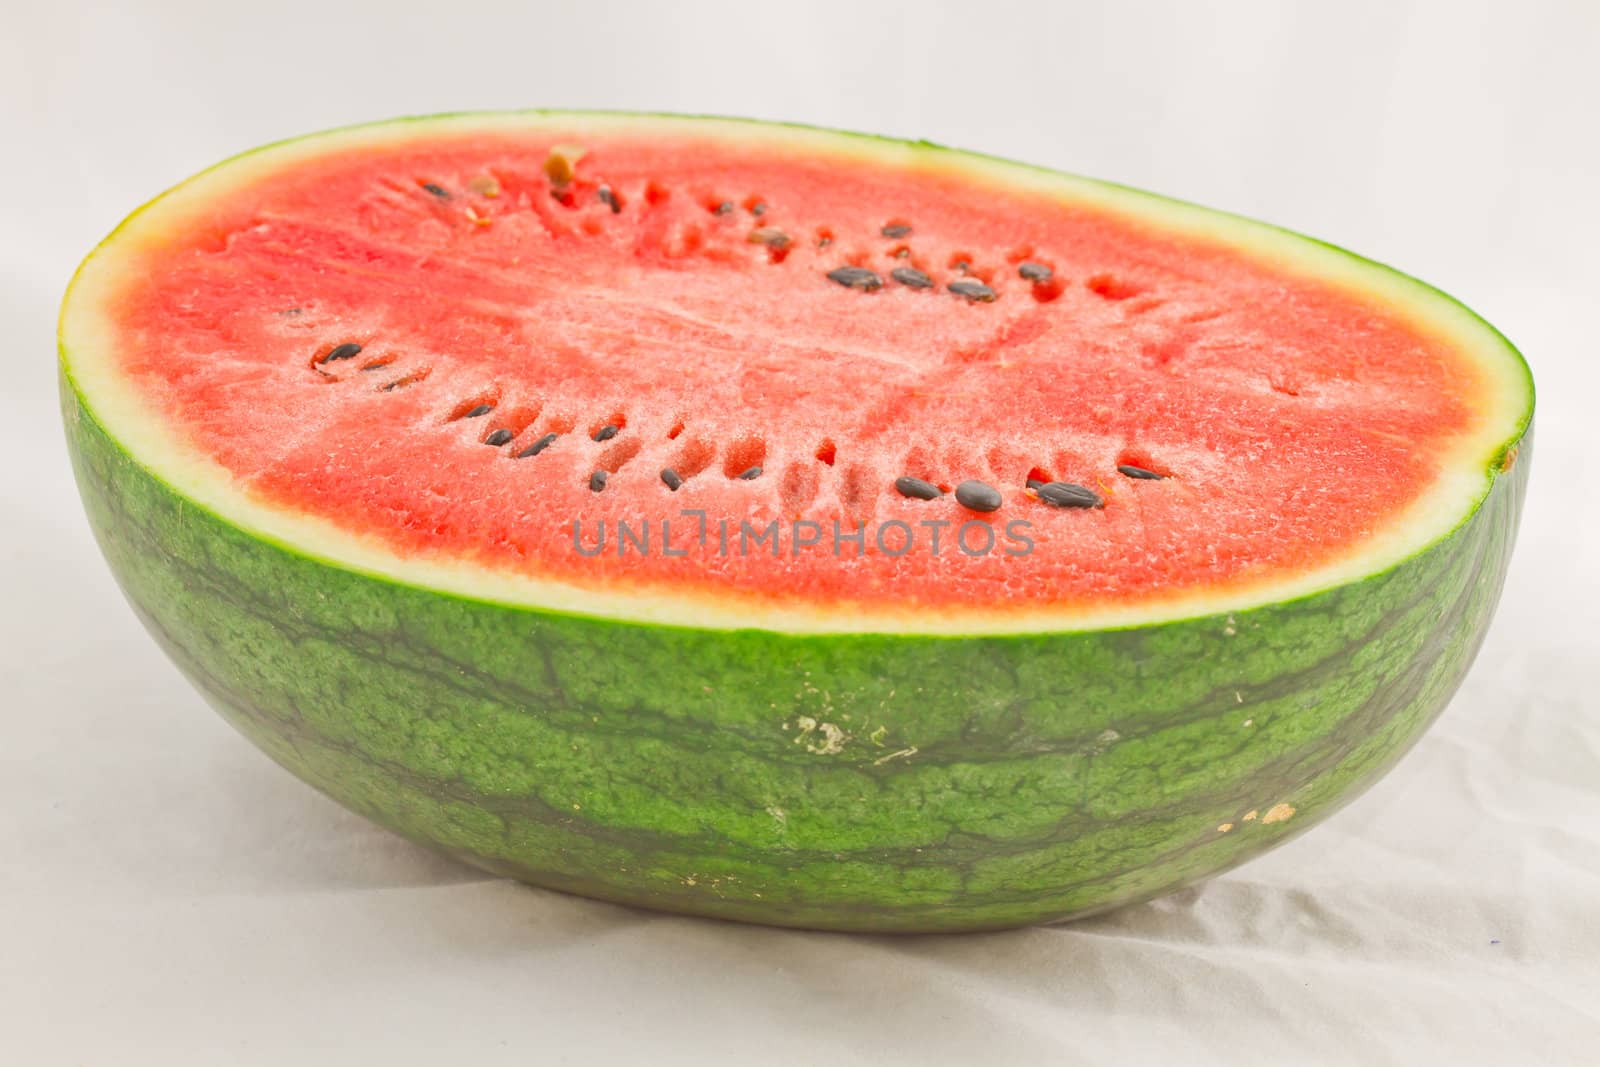 Half cut watermelon on white background.